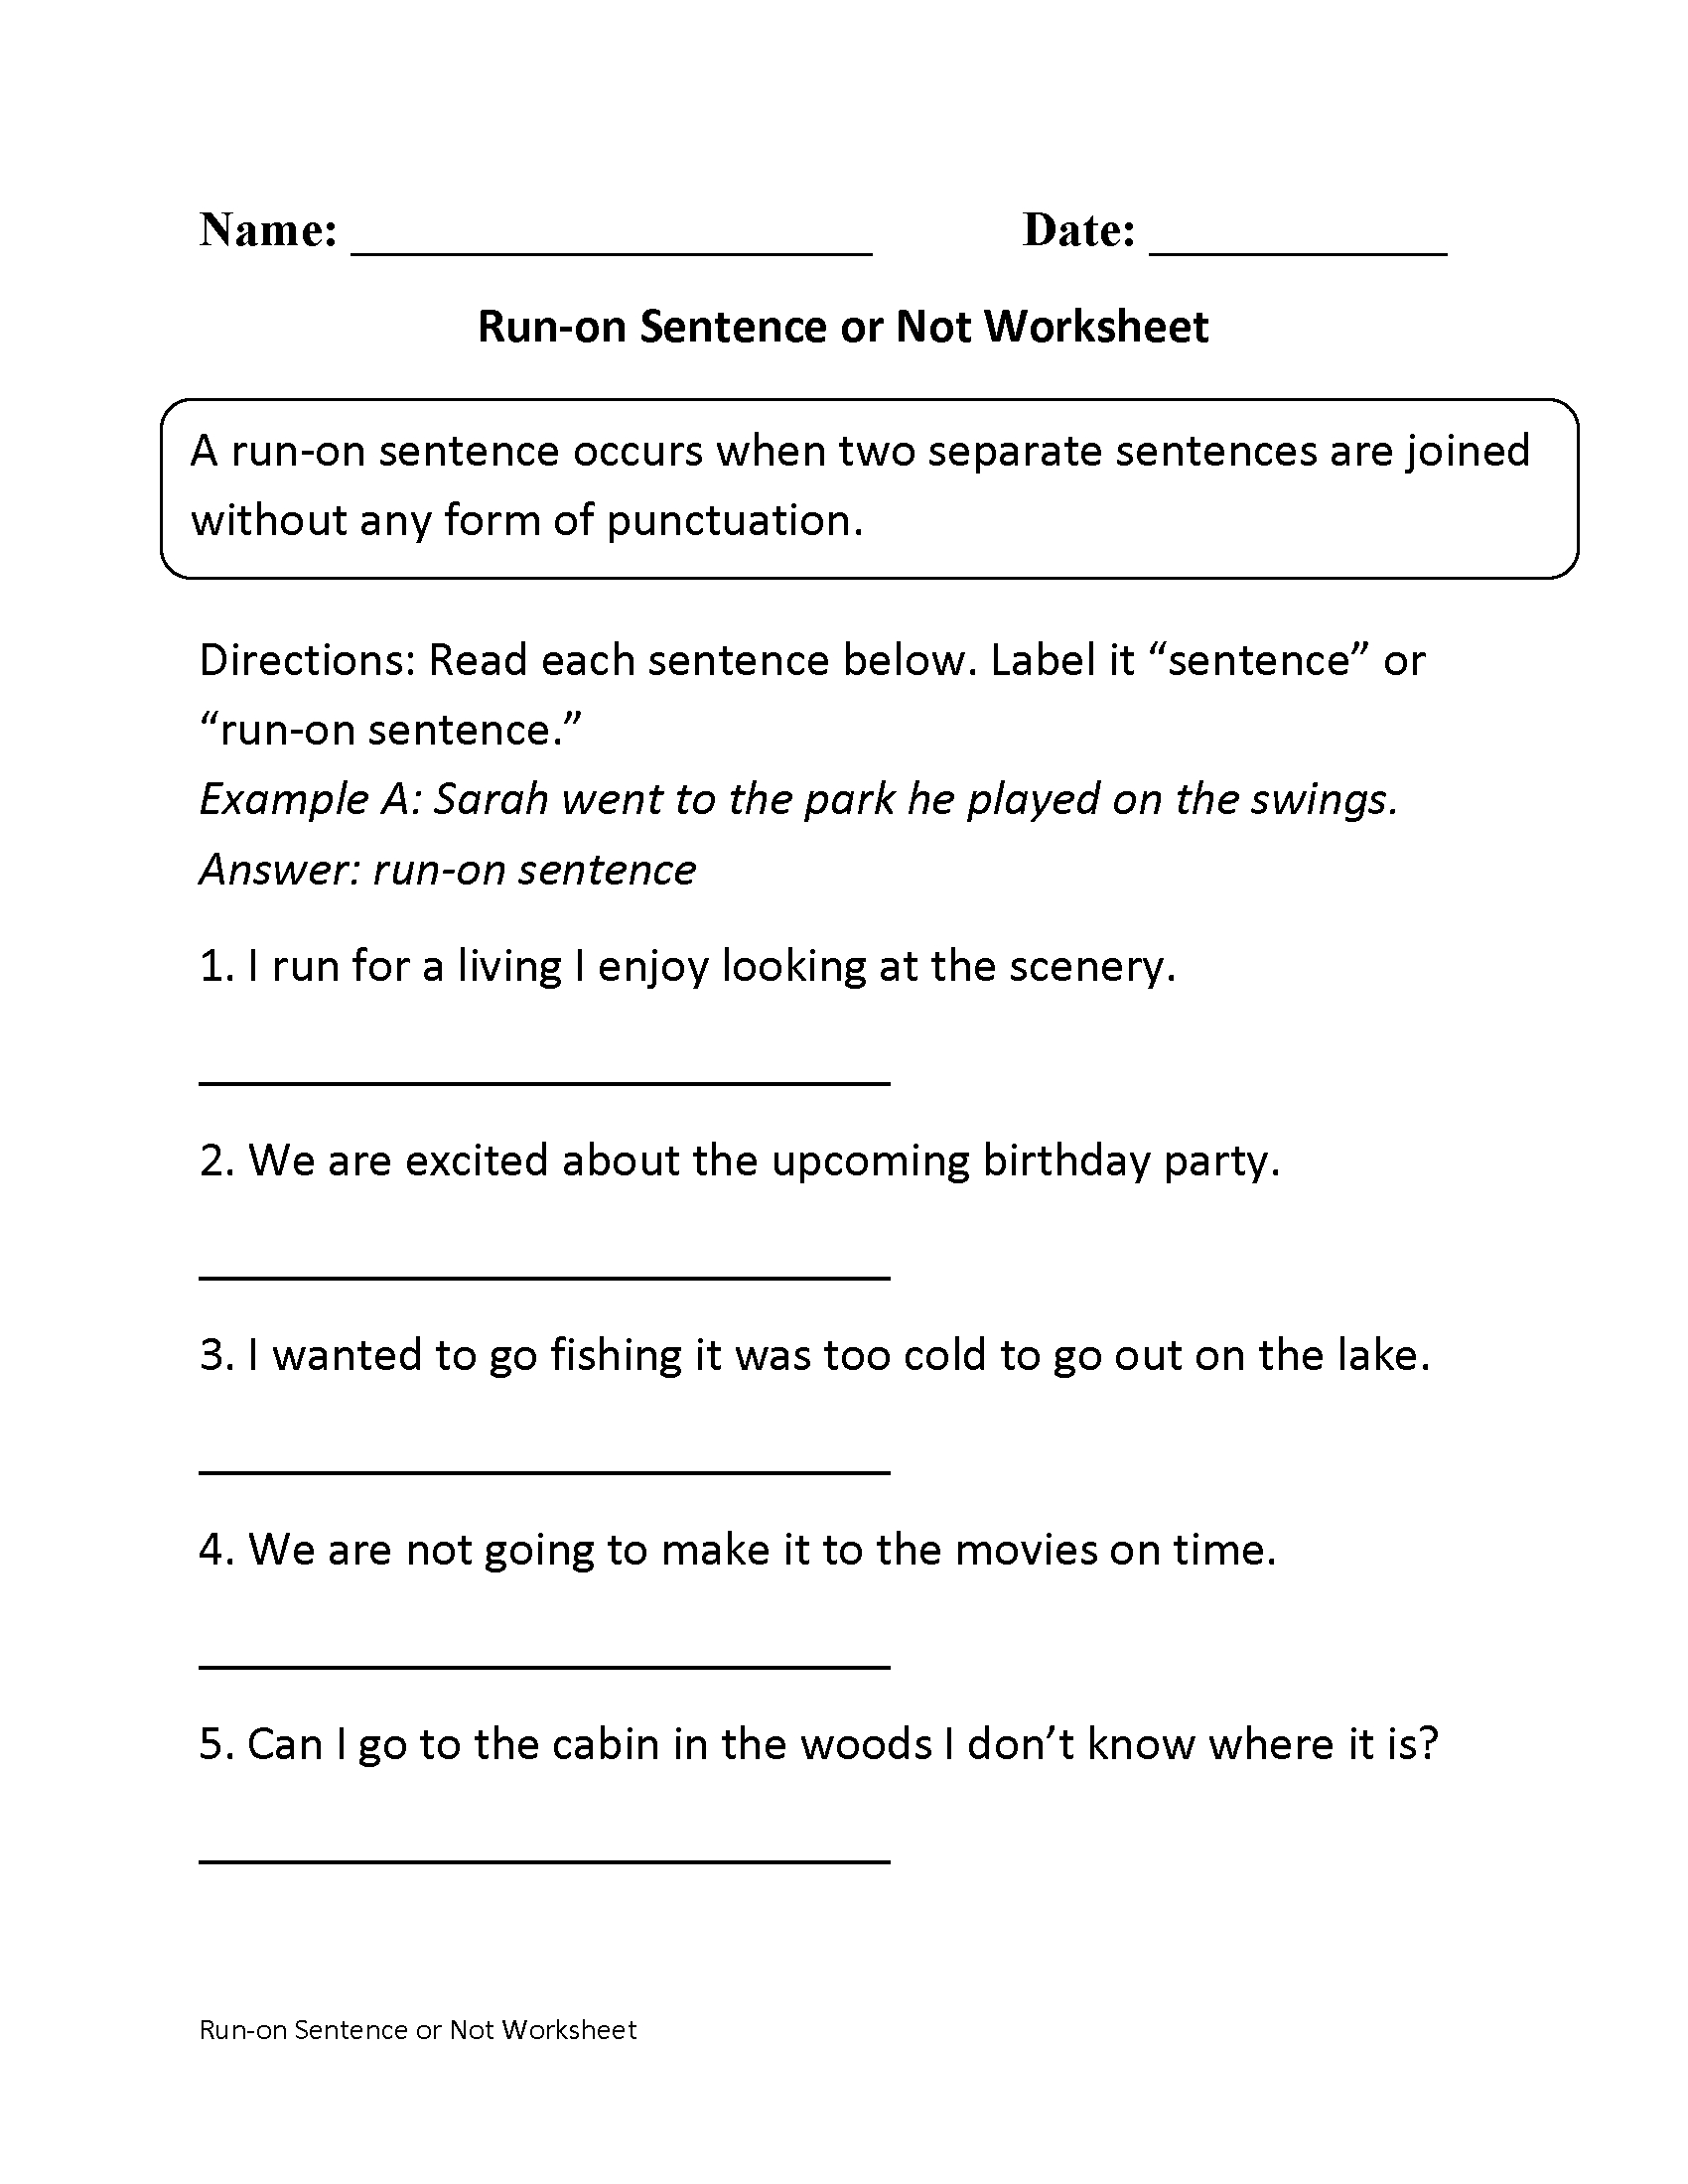 sentences-worksheets-run-on-sentences-worksheets-db-excel